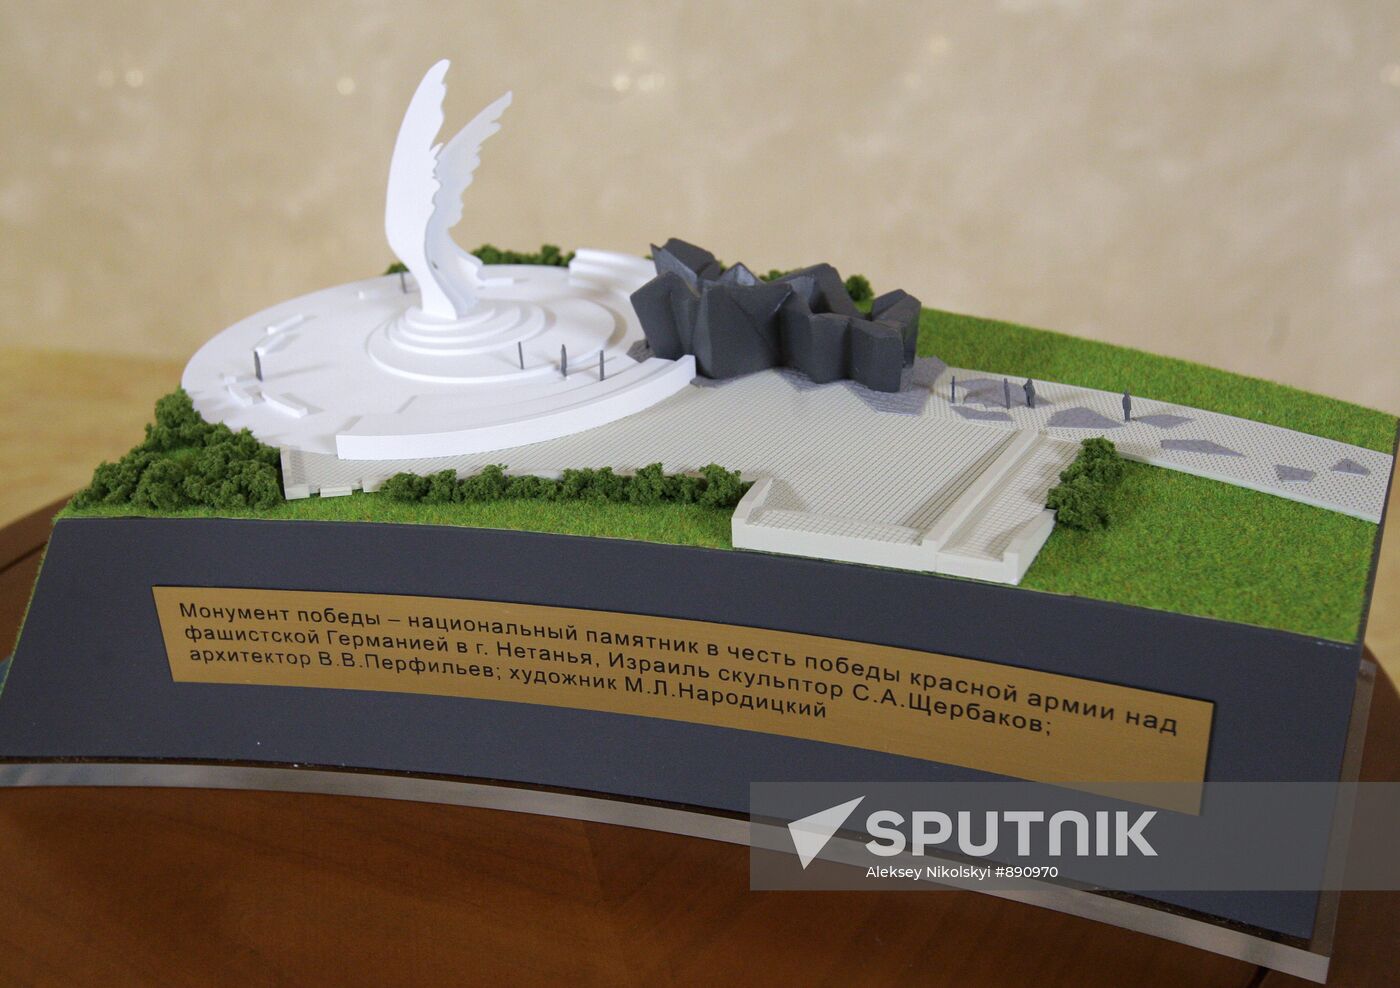 Model of Victory Memorial to be built in Netanya